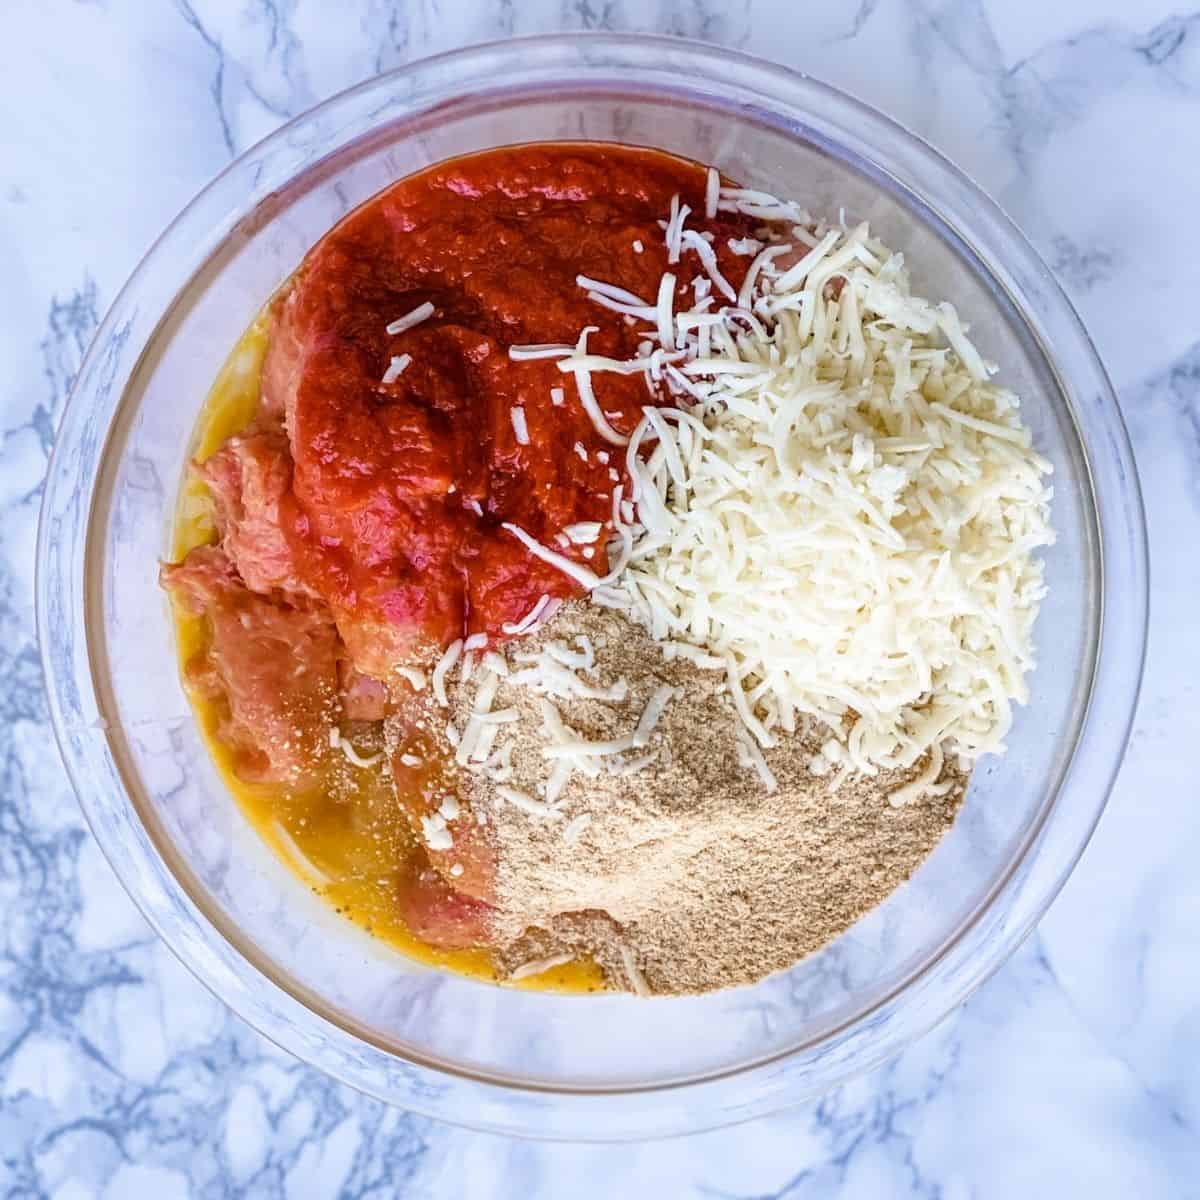 meatloaf ingredients in a bowl